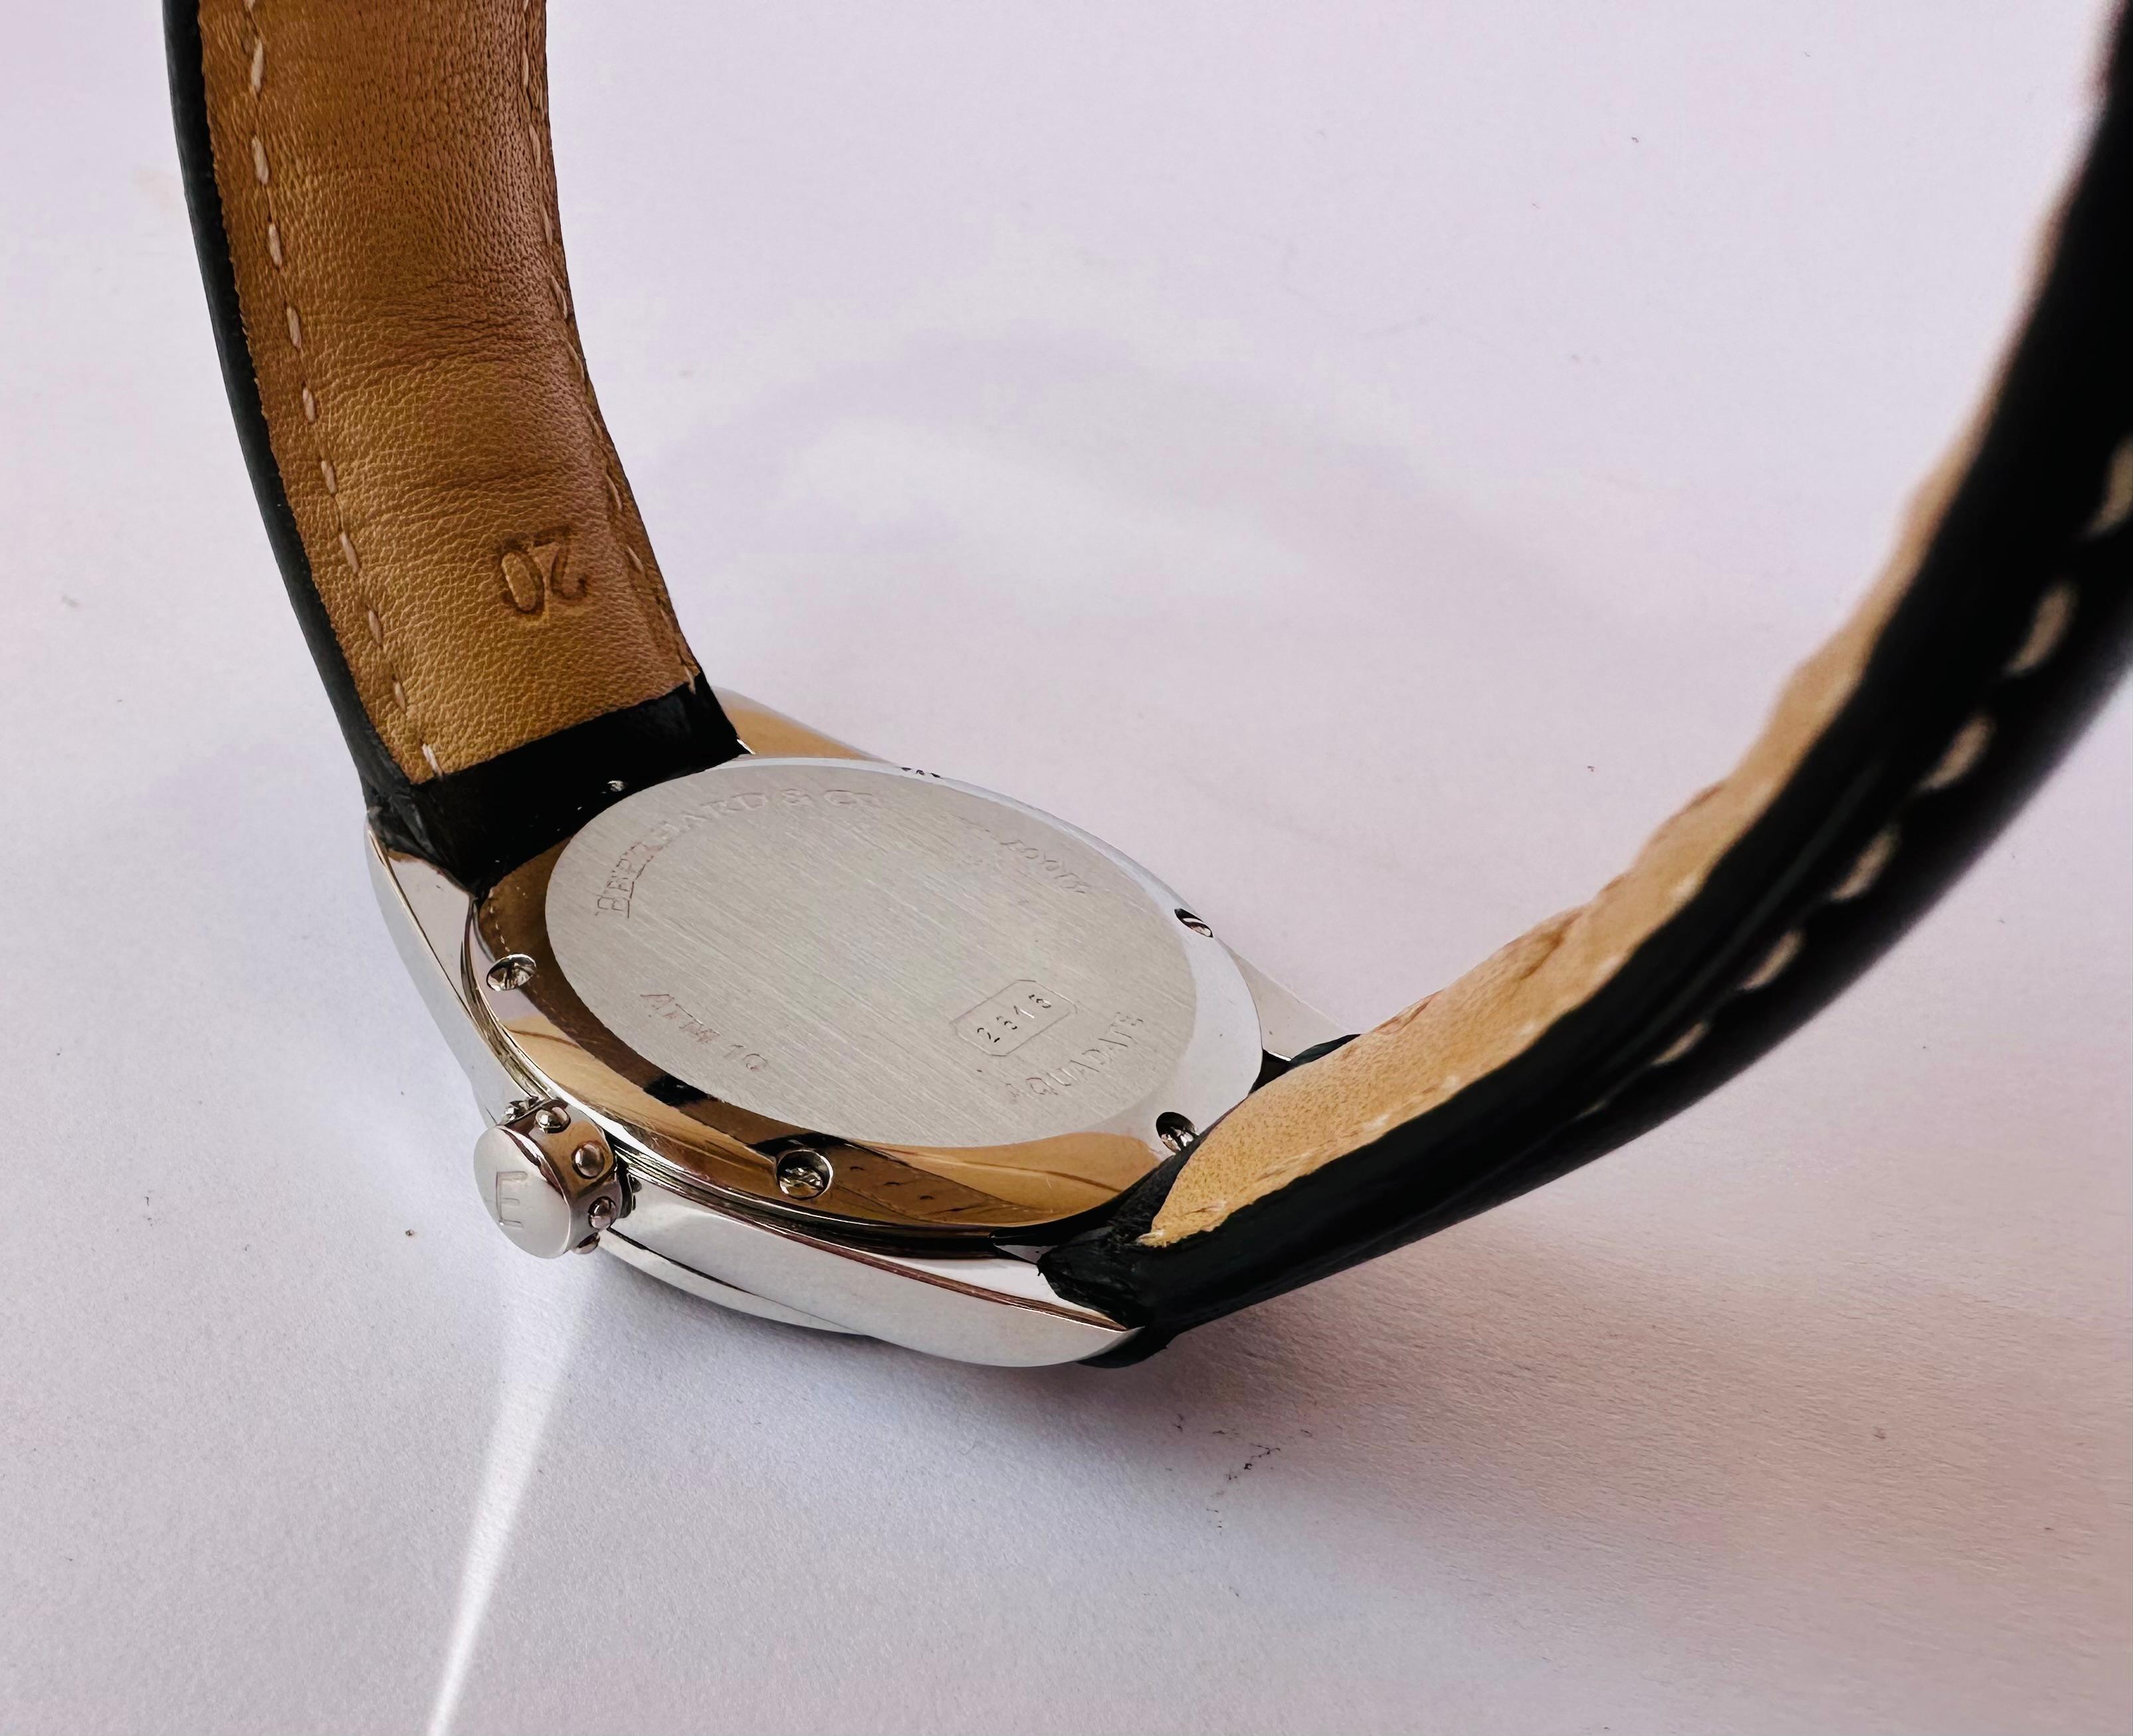 Eberhard & Co. Aquadate Automatic Ref 41007-A Date Men's Watch For Sale 7